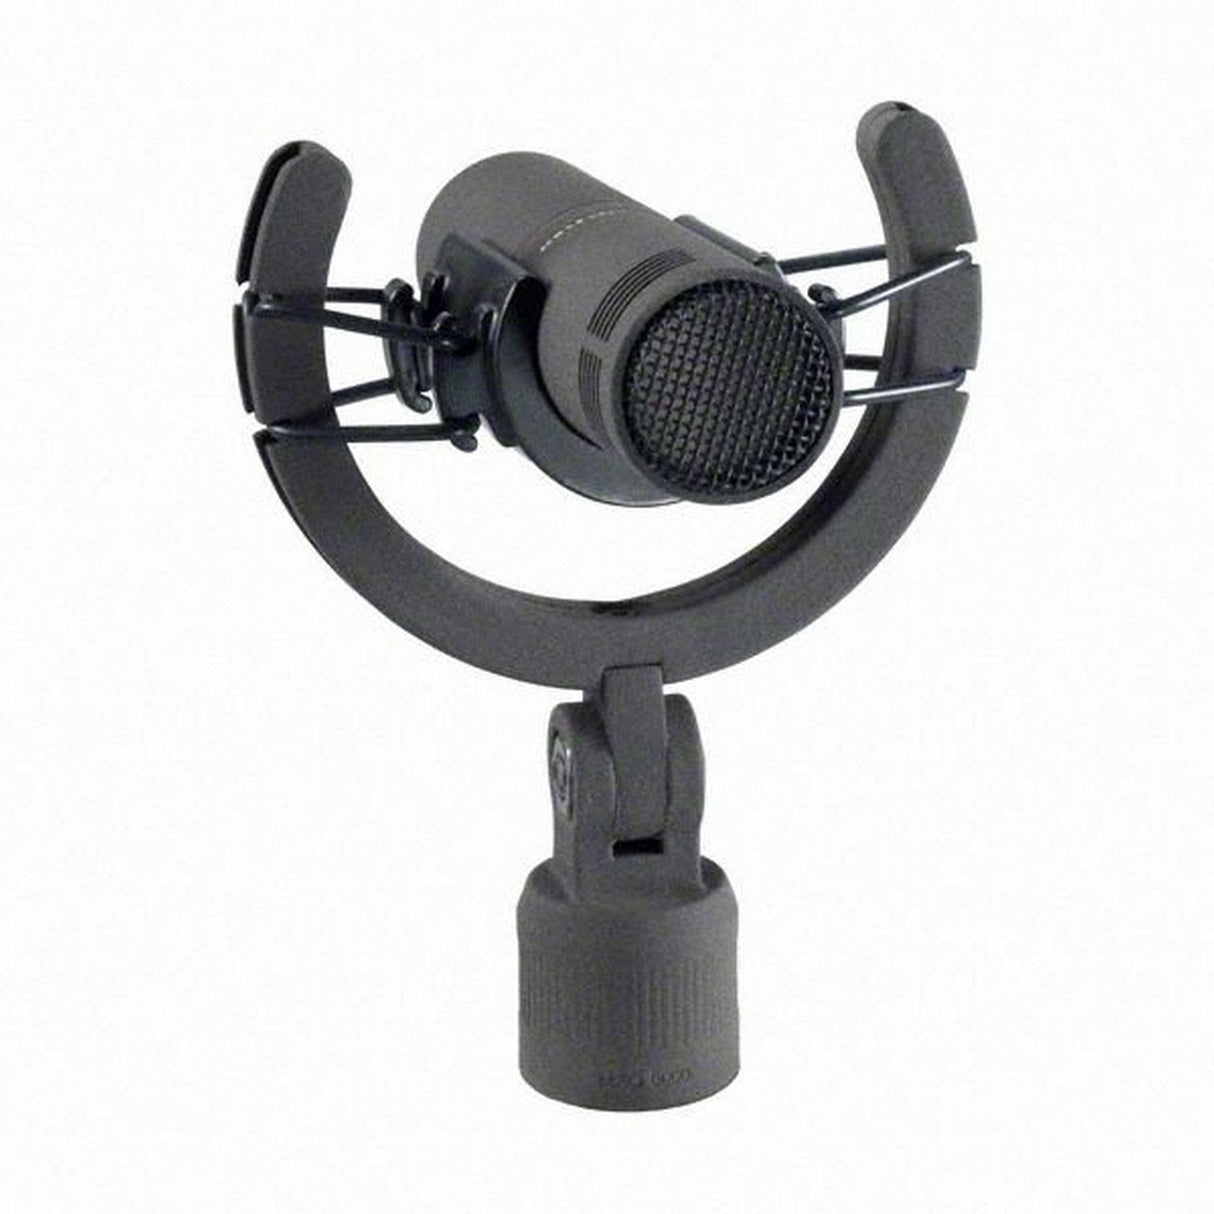 Sennheiser MKH 8040 Cardioid Microphone